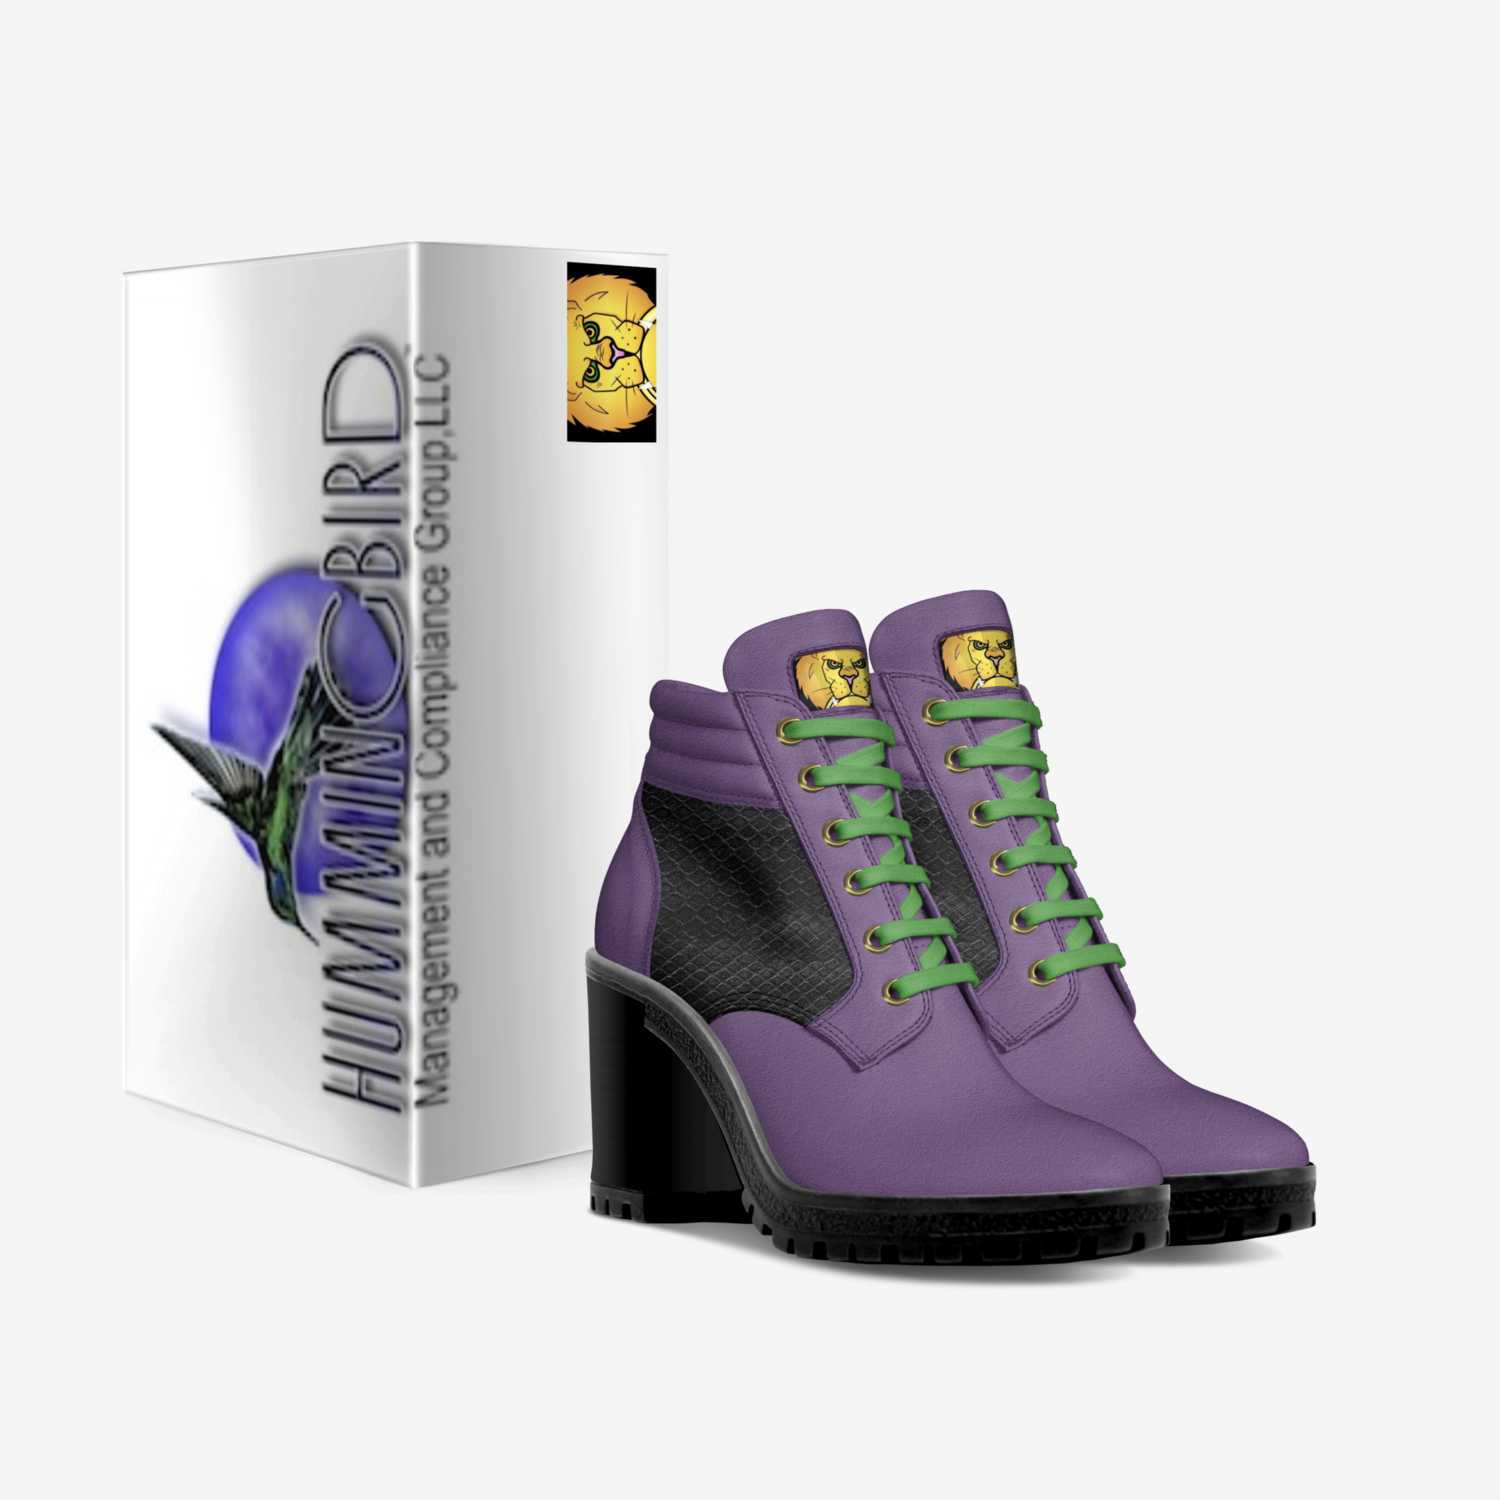 ZavierQ custom made in Italy shoes by Yogi Hampton | Box view